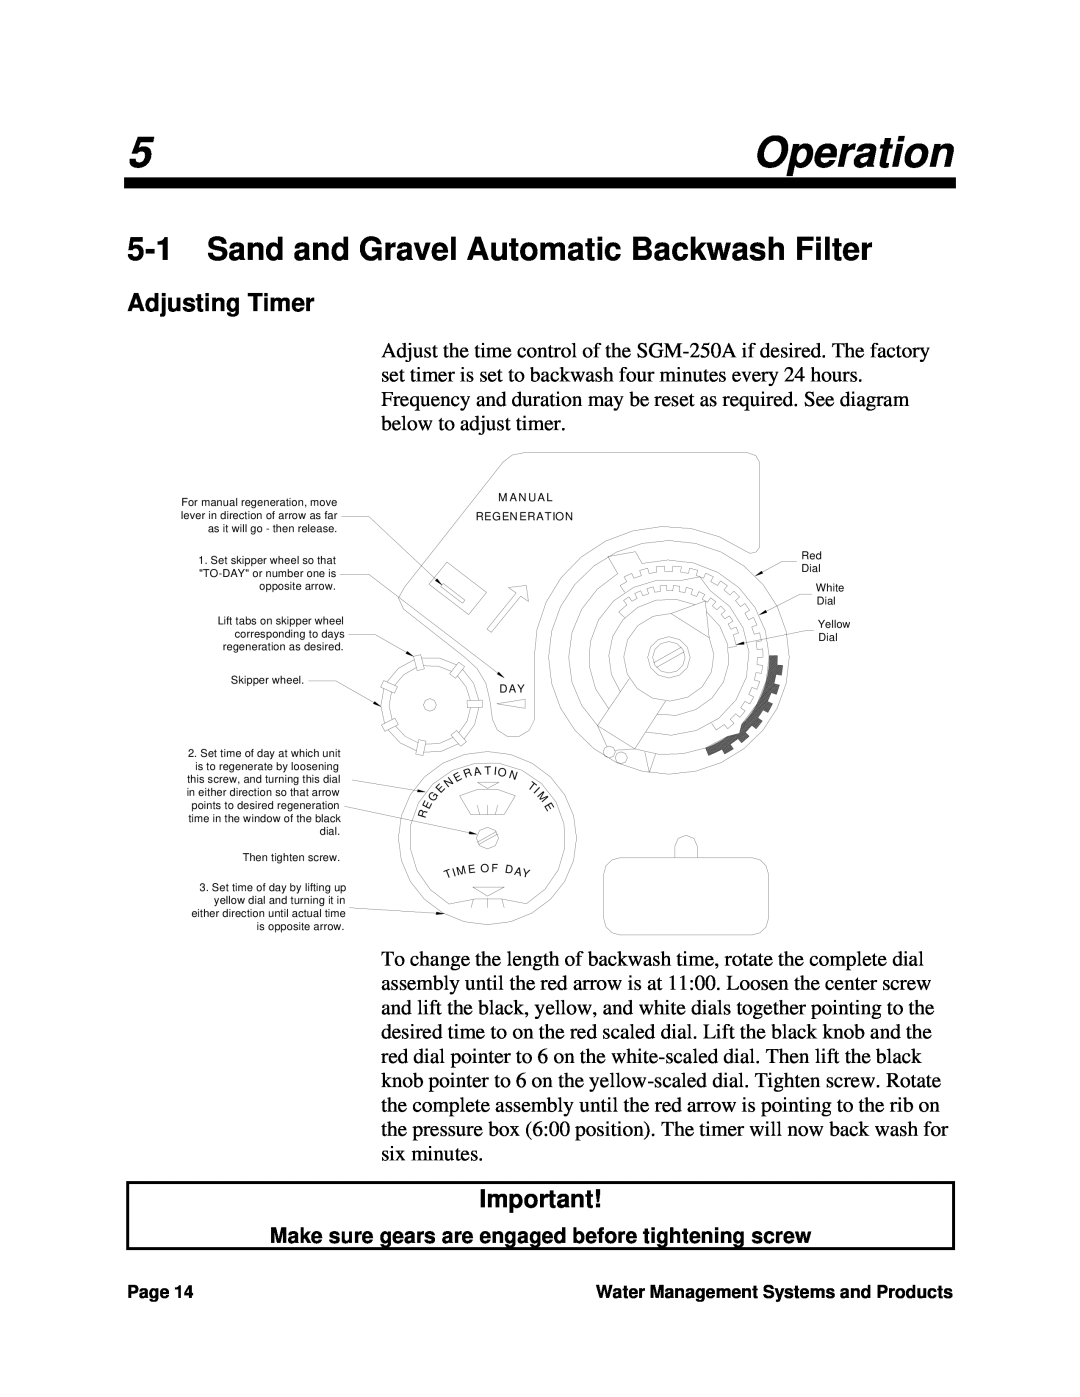 Sterling SGM-250A manual Operation, 5-1Sand and Gravel Automatic Backwash Filter, Adjusting Timer 